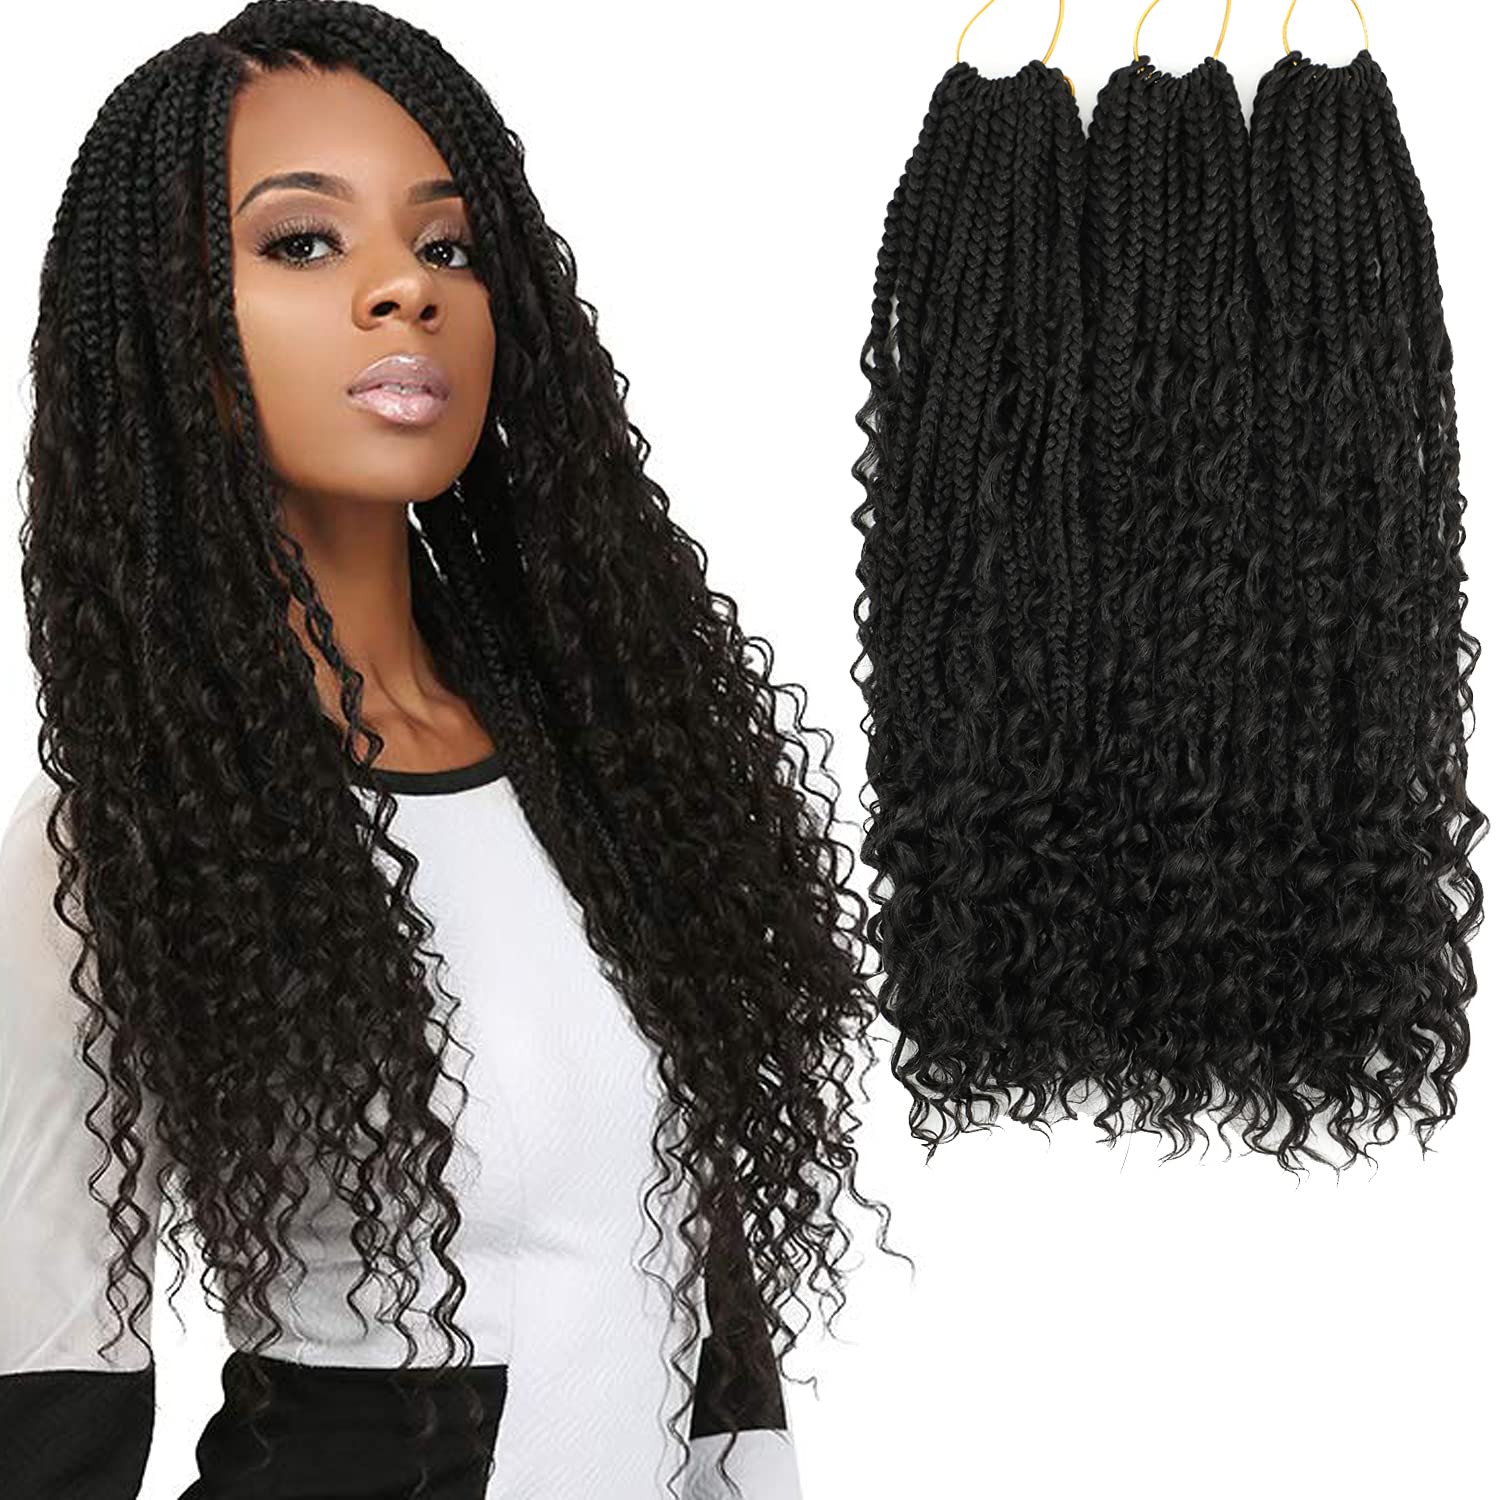 6 Packs Crochet Box Braids Curly Ends 12 Inch Bohemian Box Braids Crochet  Hair for Black Women (2#, 12 Inch)